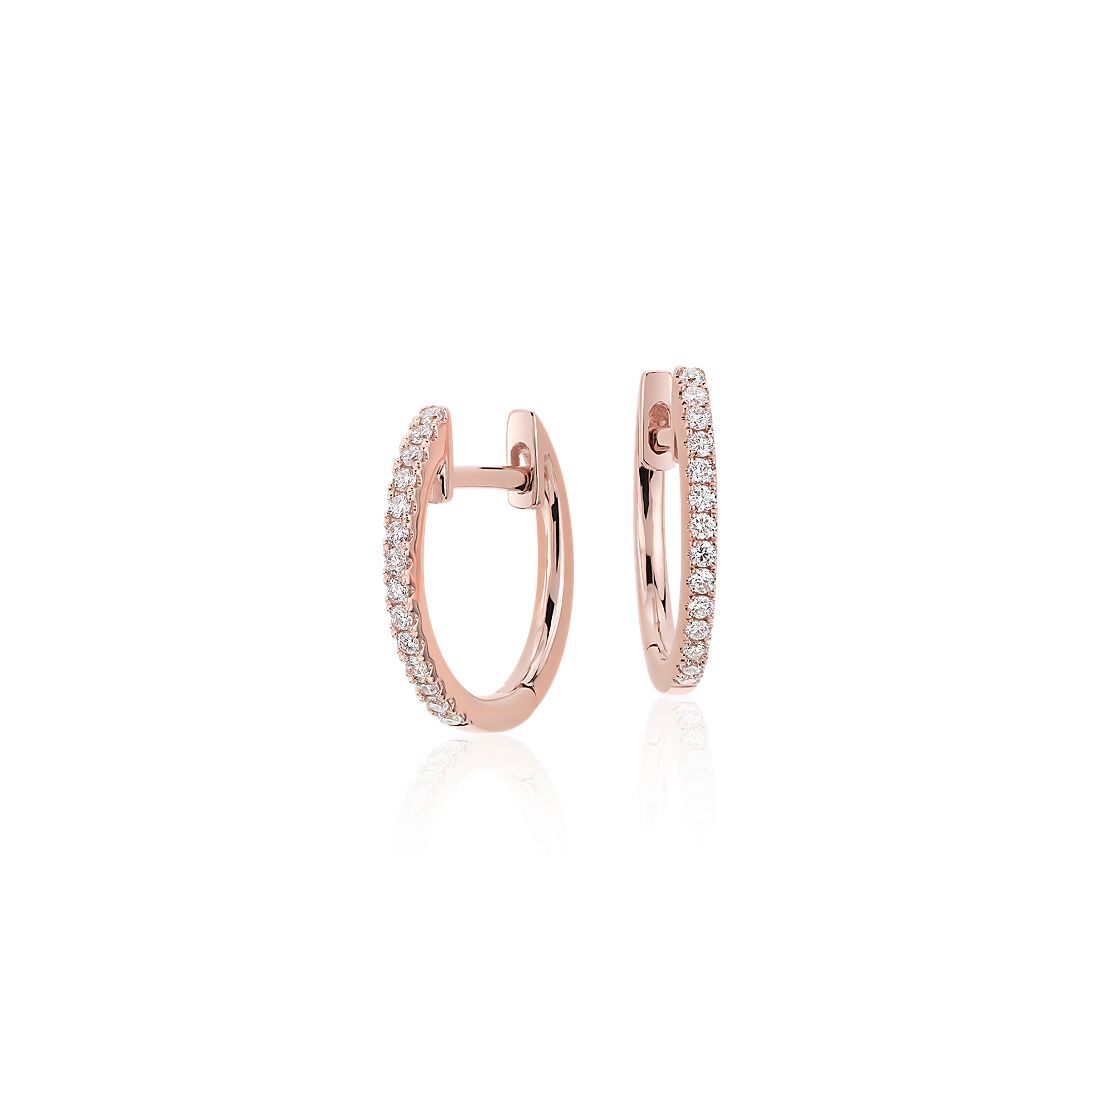 Details about   18k Rose Gold Huggies Earrings Diamond Gemstone Hoop Earrings Fashion Jewelry